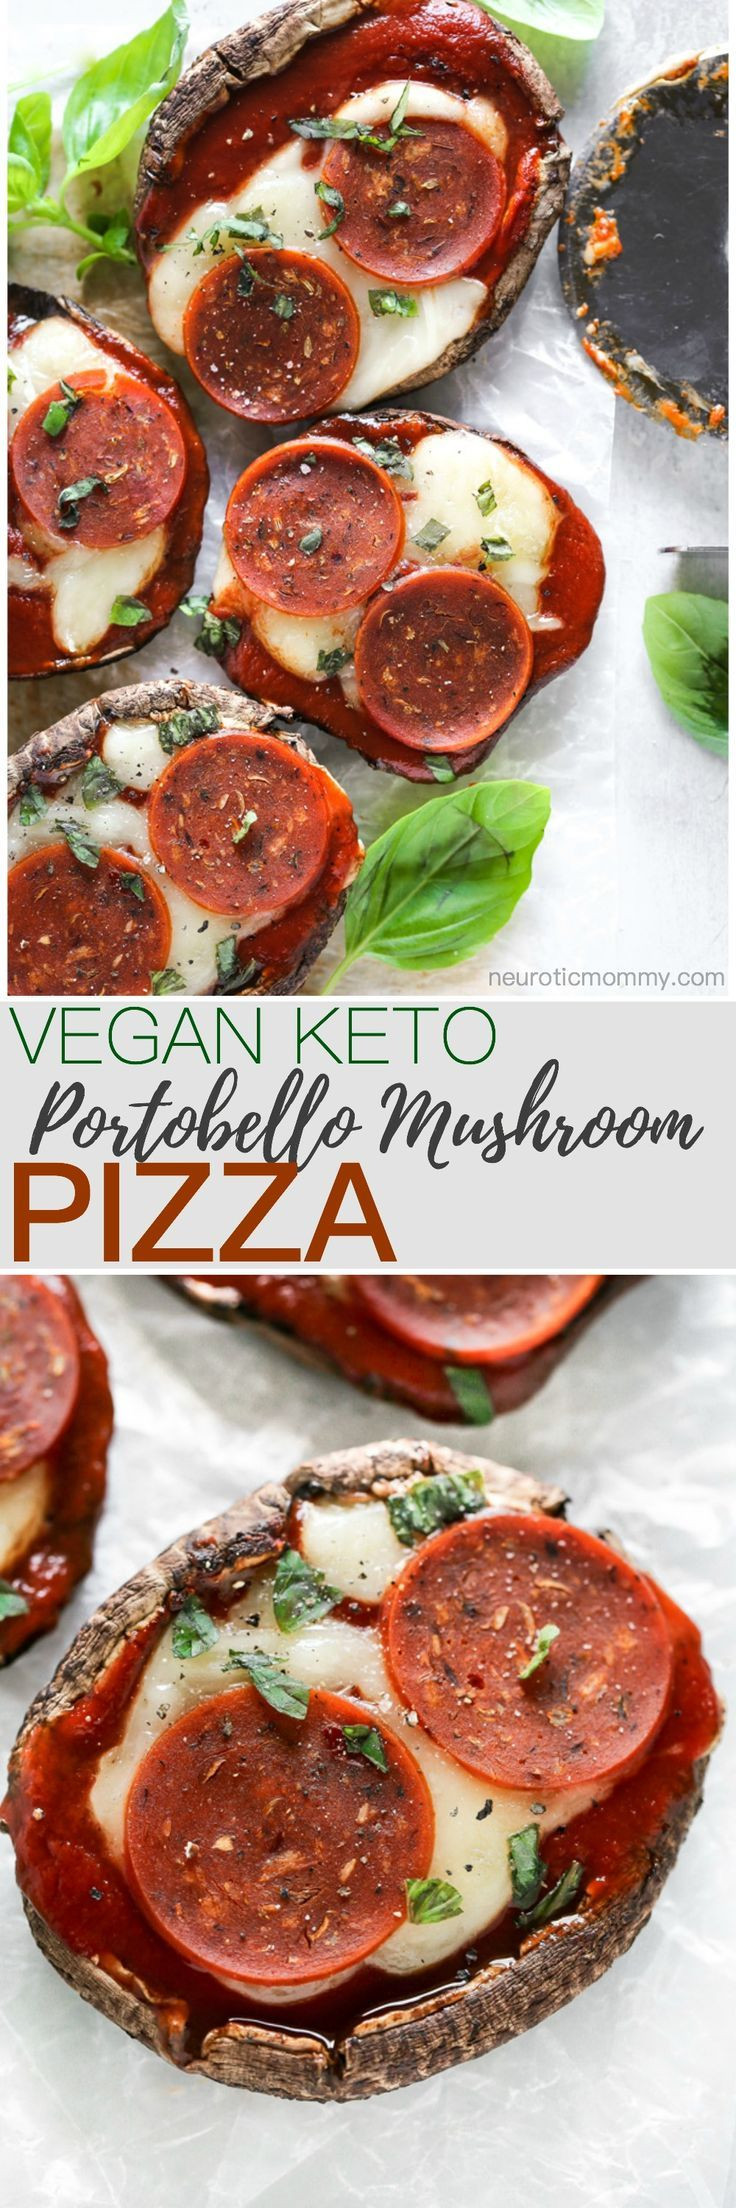 Vegan Keto Appetizers
 Vegan Keto Portobello Mushroom Pizzas Recipe